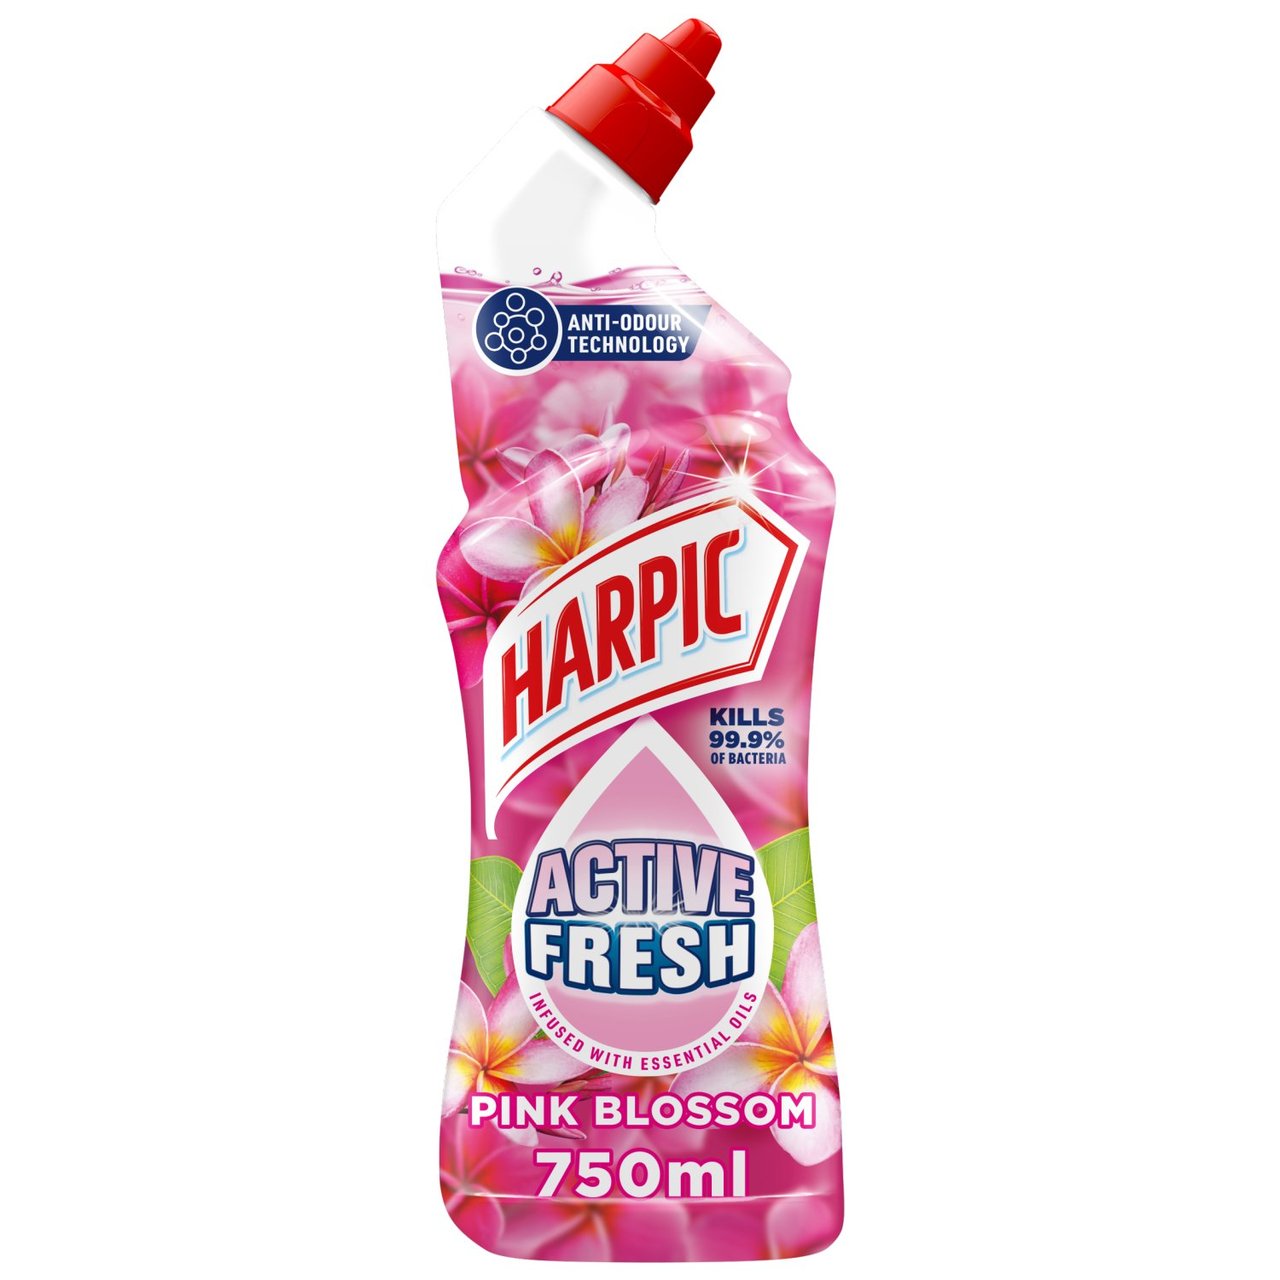 Harpic Active Fresh Pink Blossom Toilet Cleaner Gel